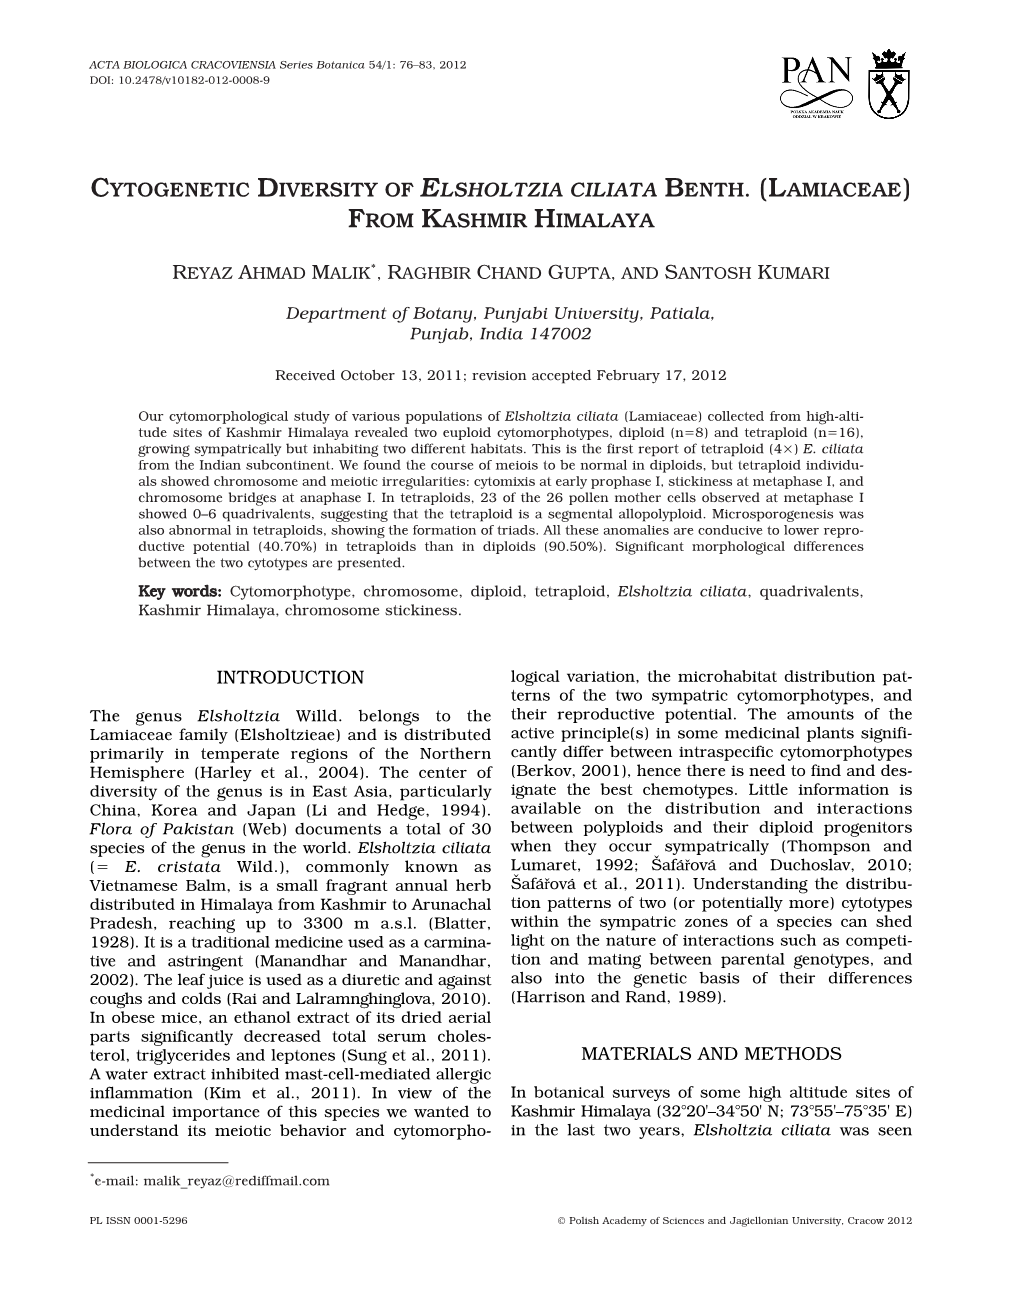 Cytogenetic Diversity of Elsholtzia Ciliata Benth